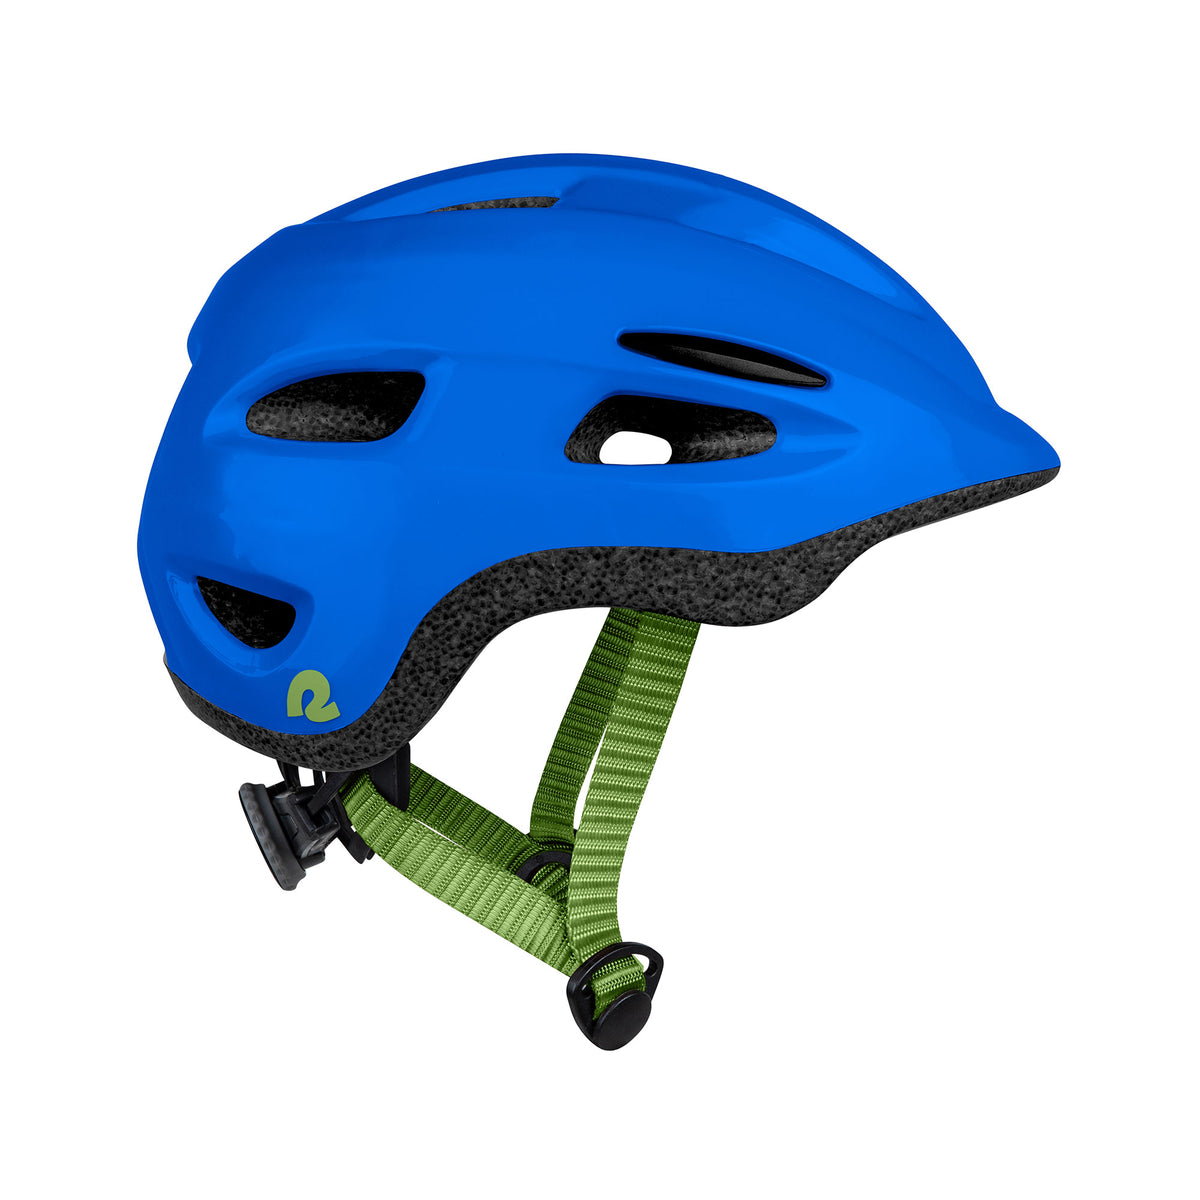 Casco Bicicleta Infantil Scout - Brash Blue – Bicicletería W&W